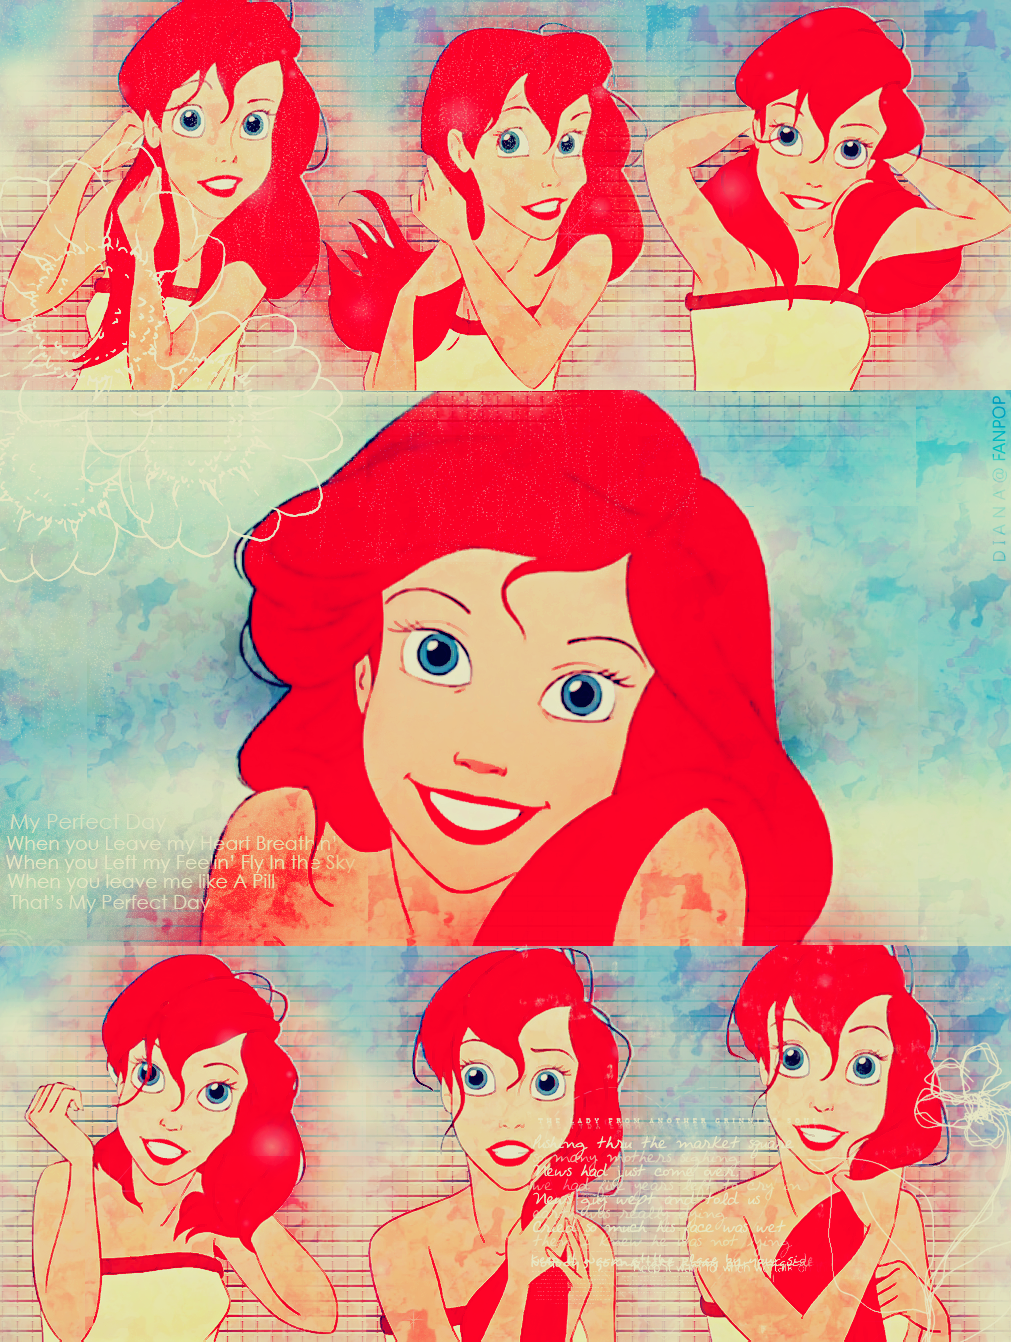 Disney Princess Image Ariel HD Wallpaper And Background Photos